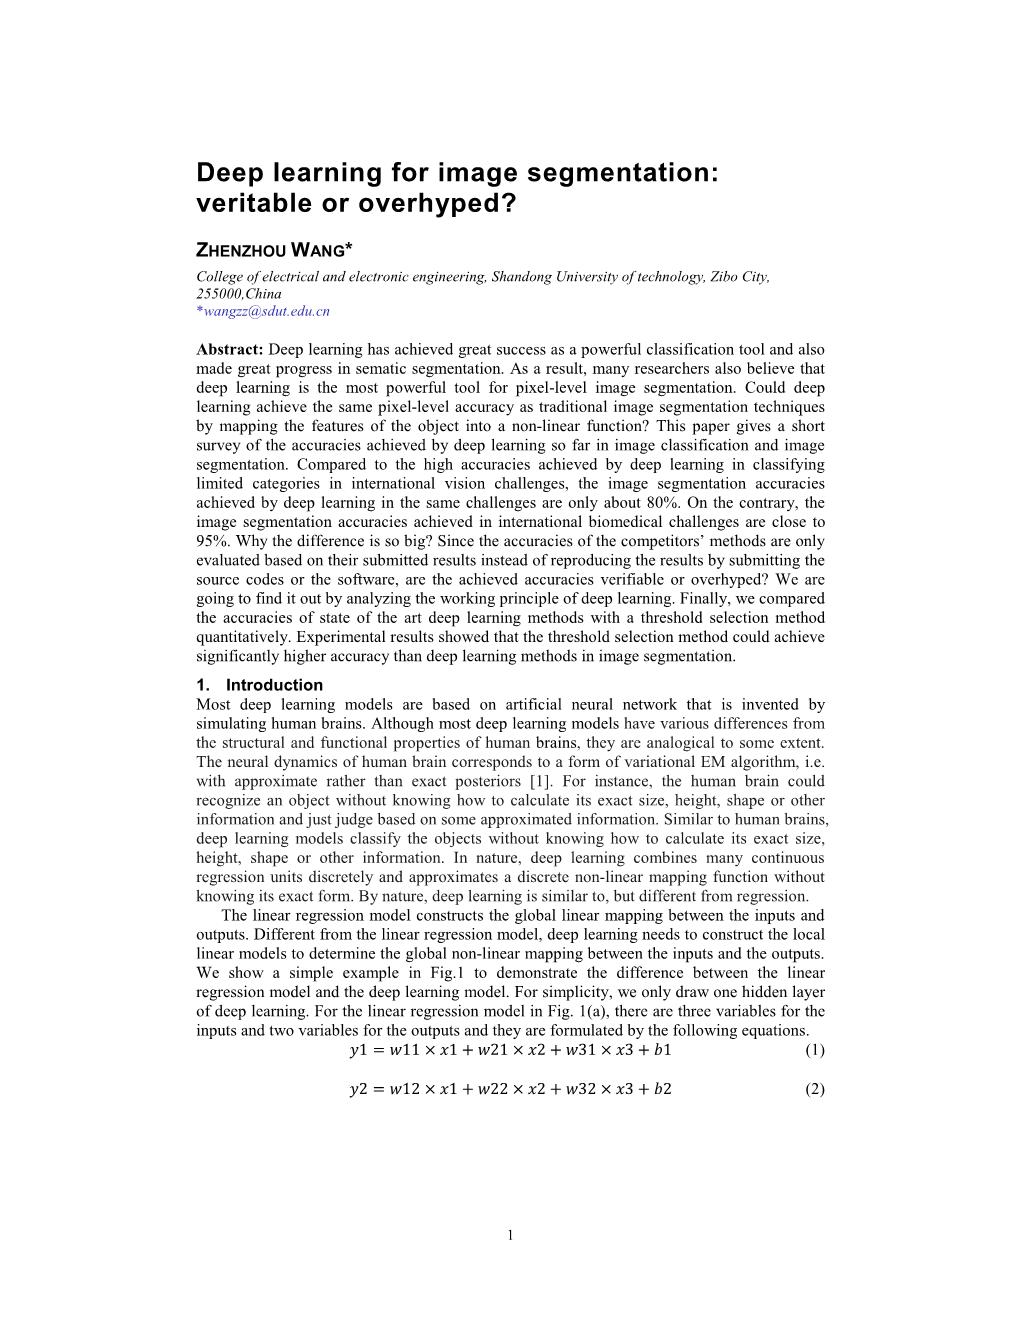 Deep Learning for Image Segmentation: Veritable Or Overhyped?